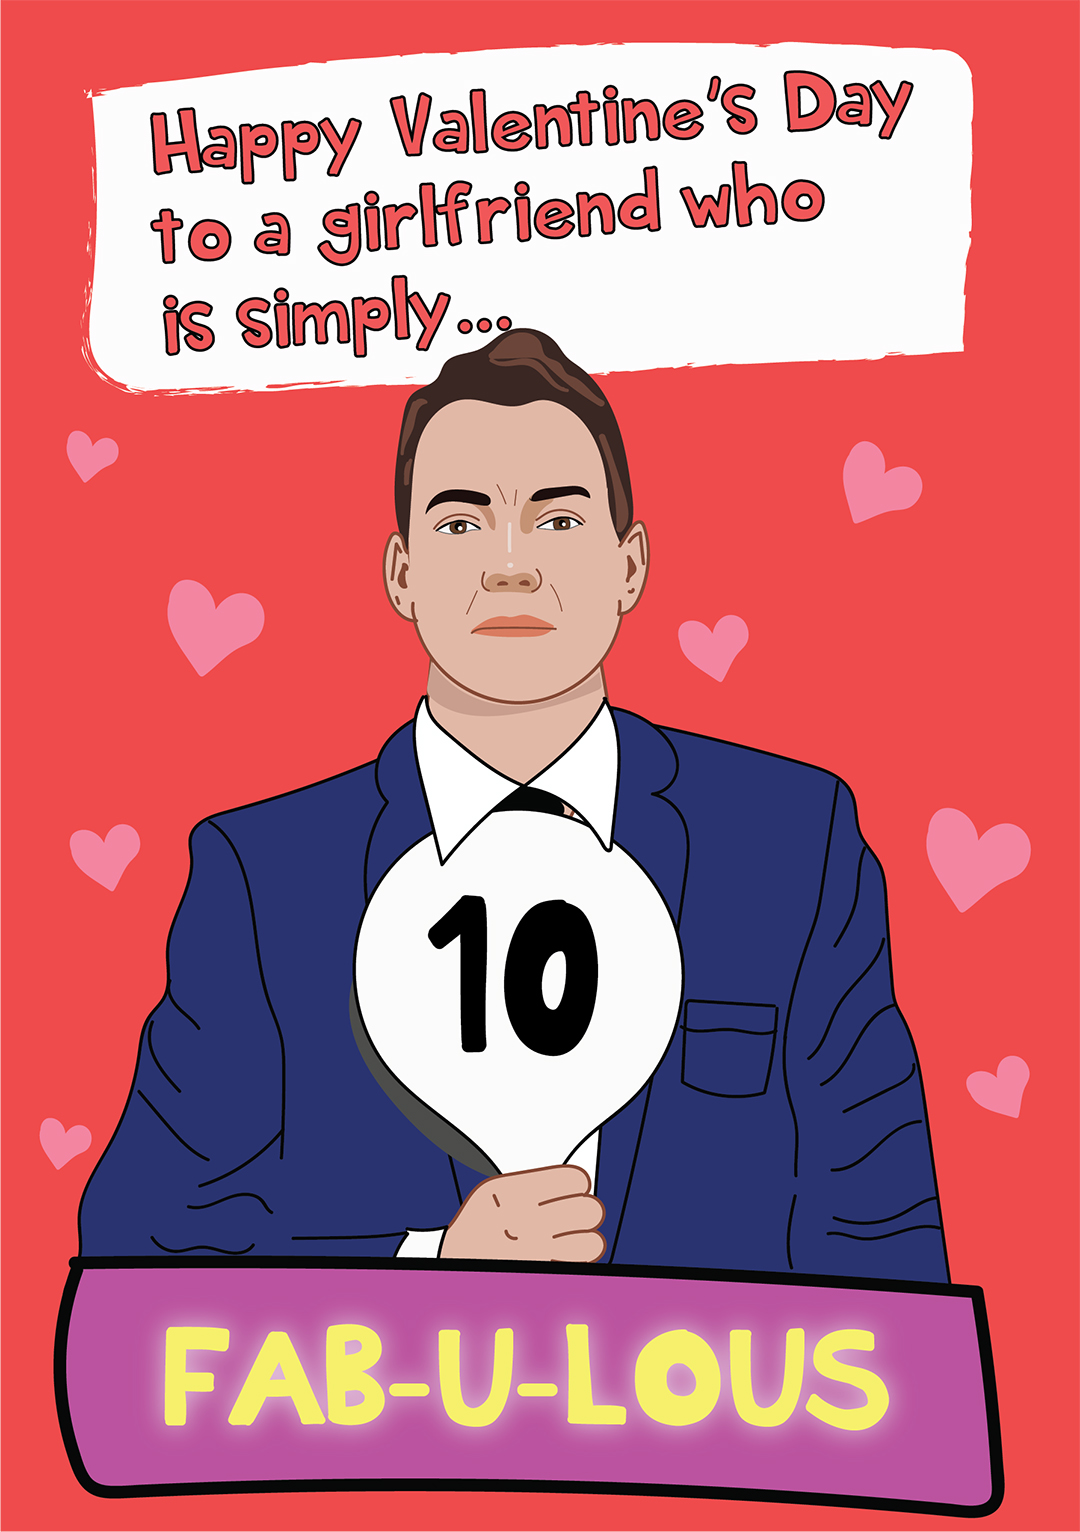 Fab-u-lous Girlfriend 10/10 Valentine's Day Card